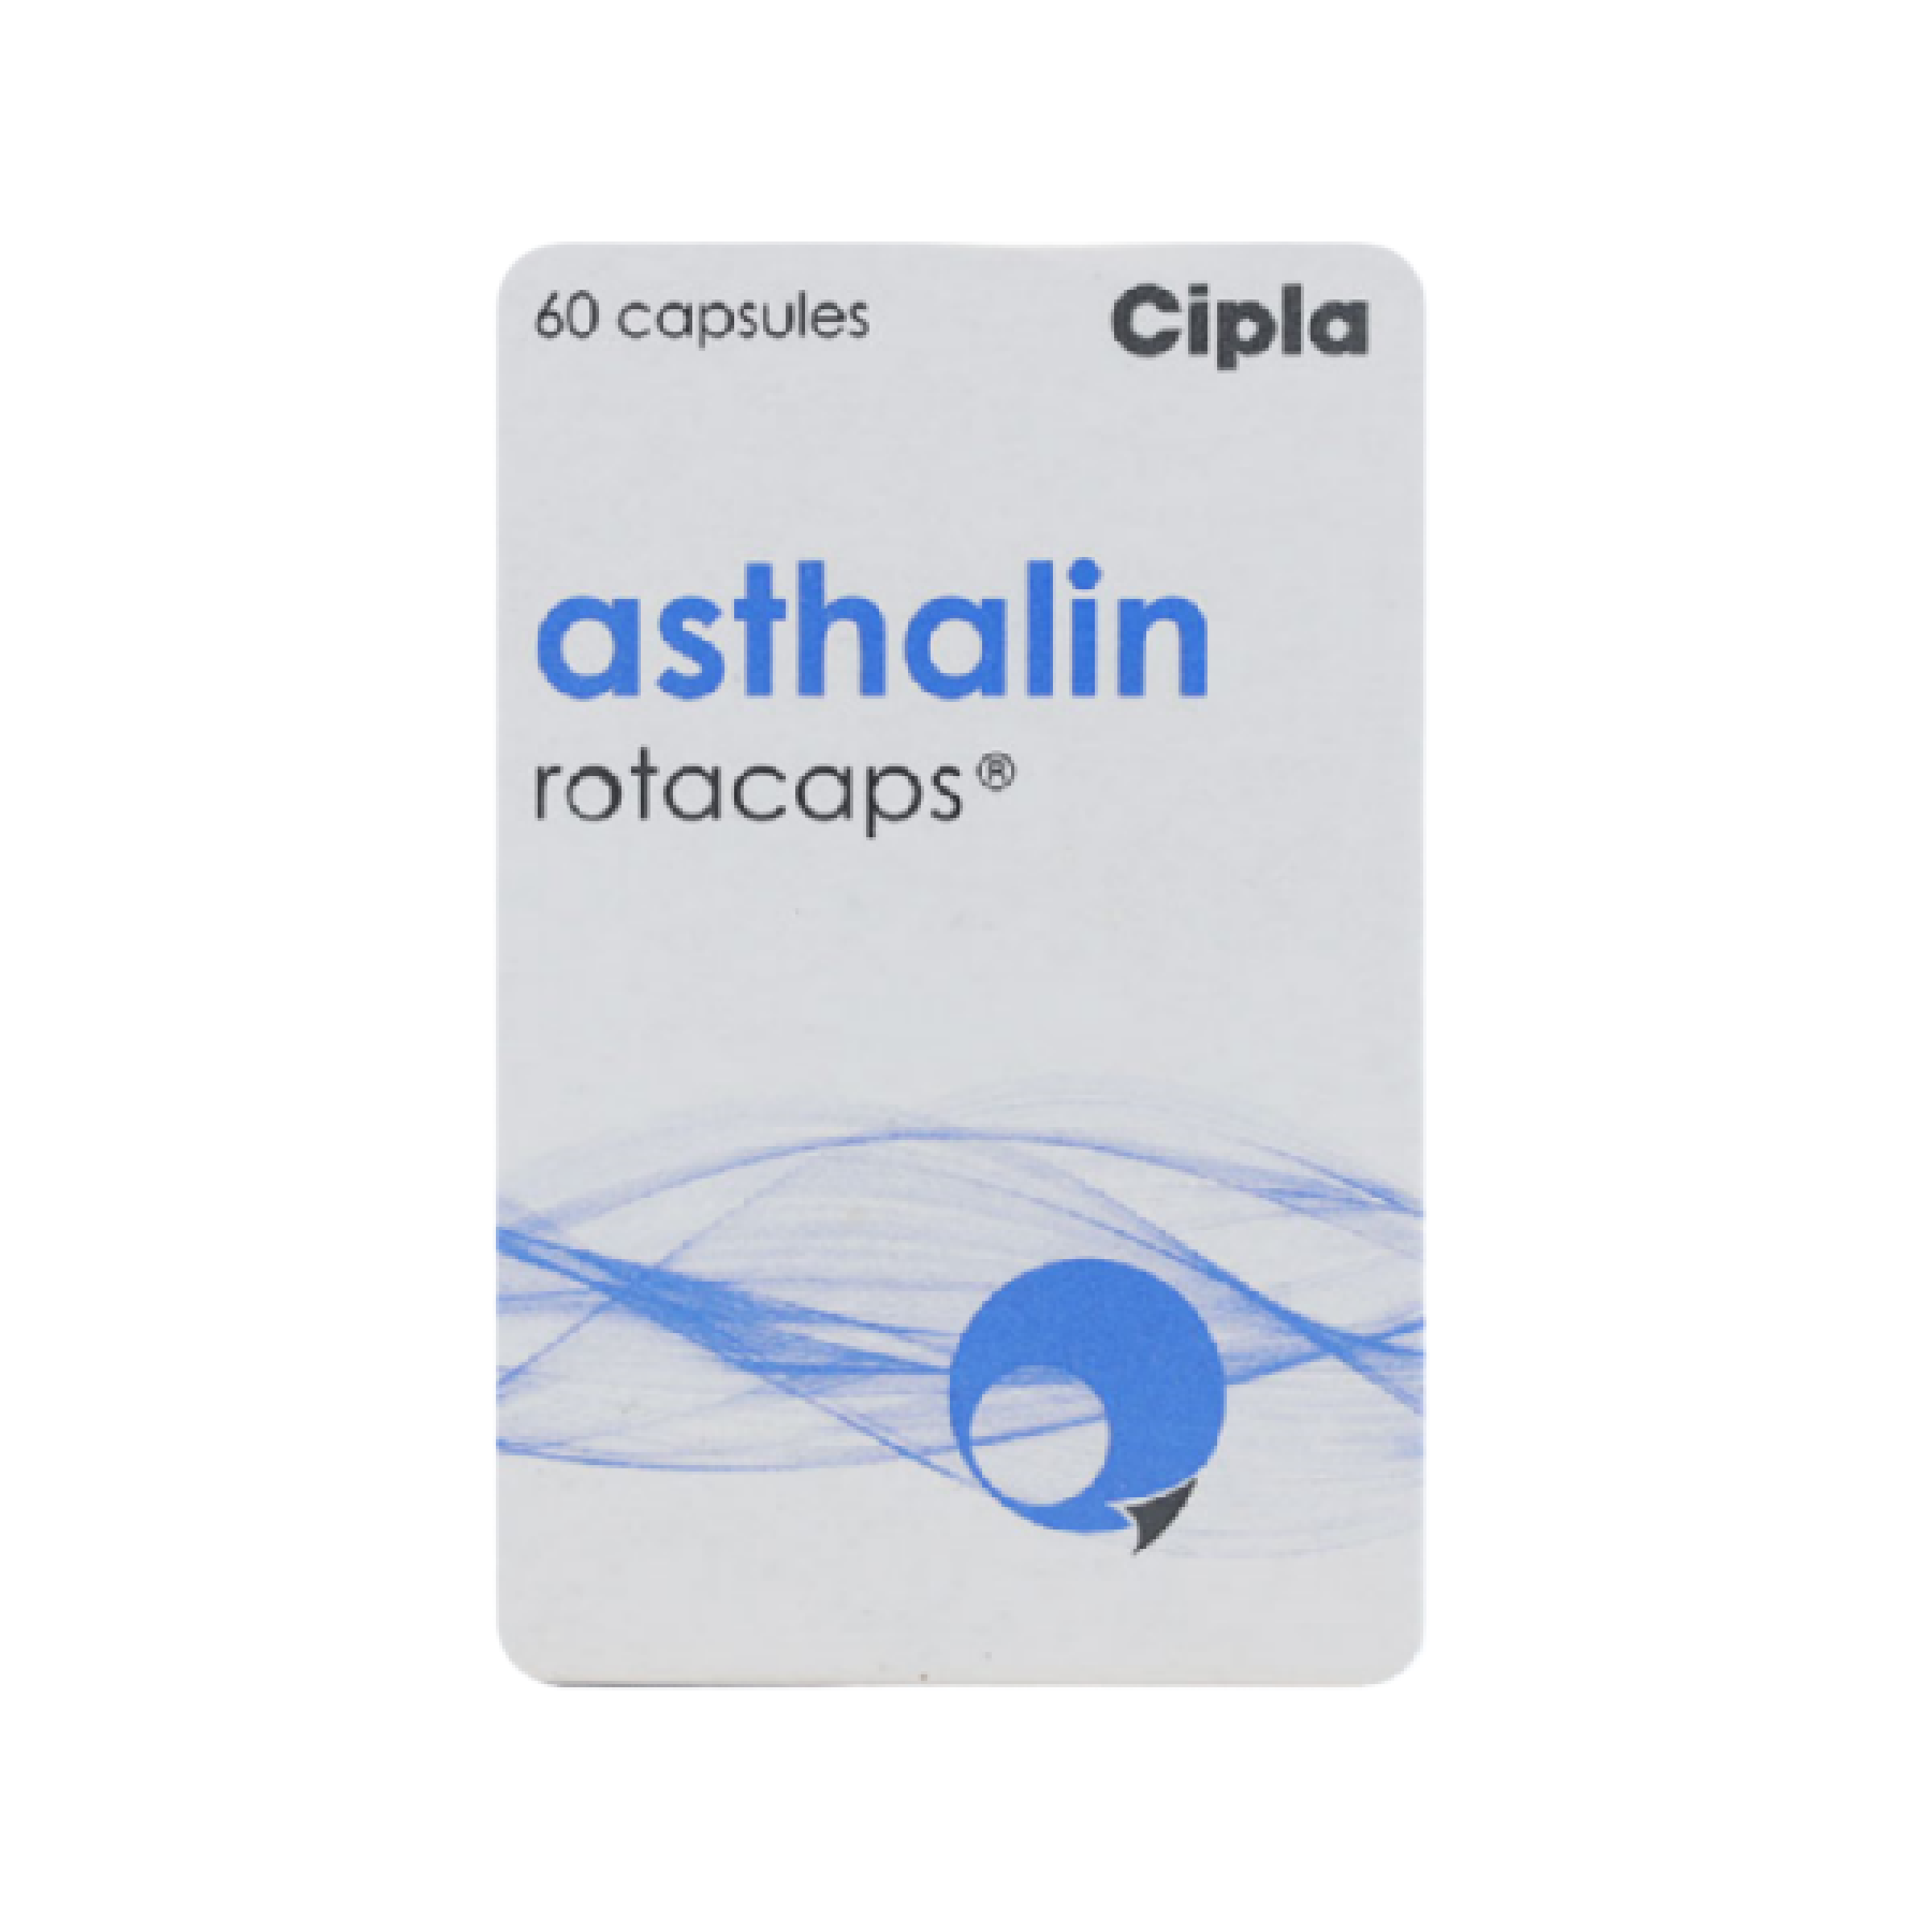 Asthalin Rotacaps 200 mcg Online | Pocket Chemist